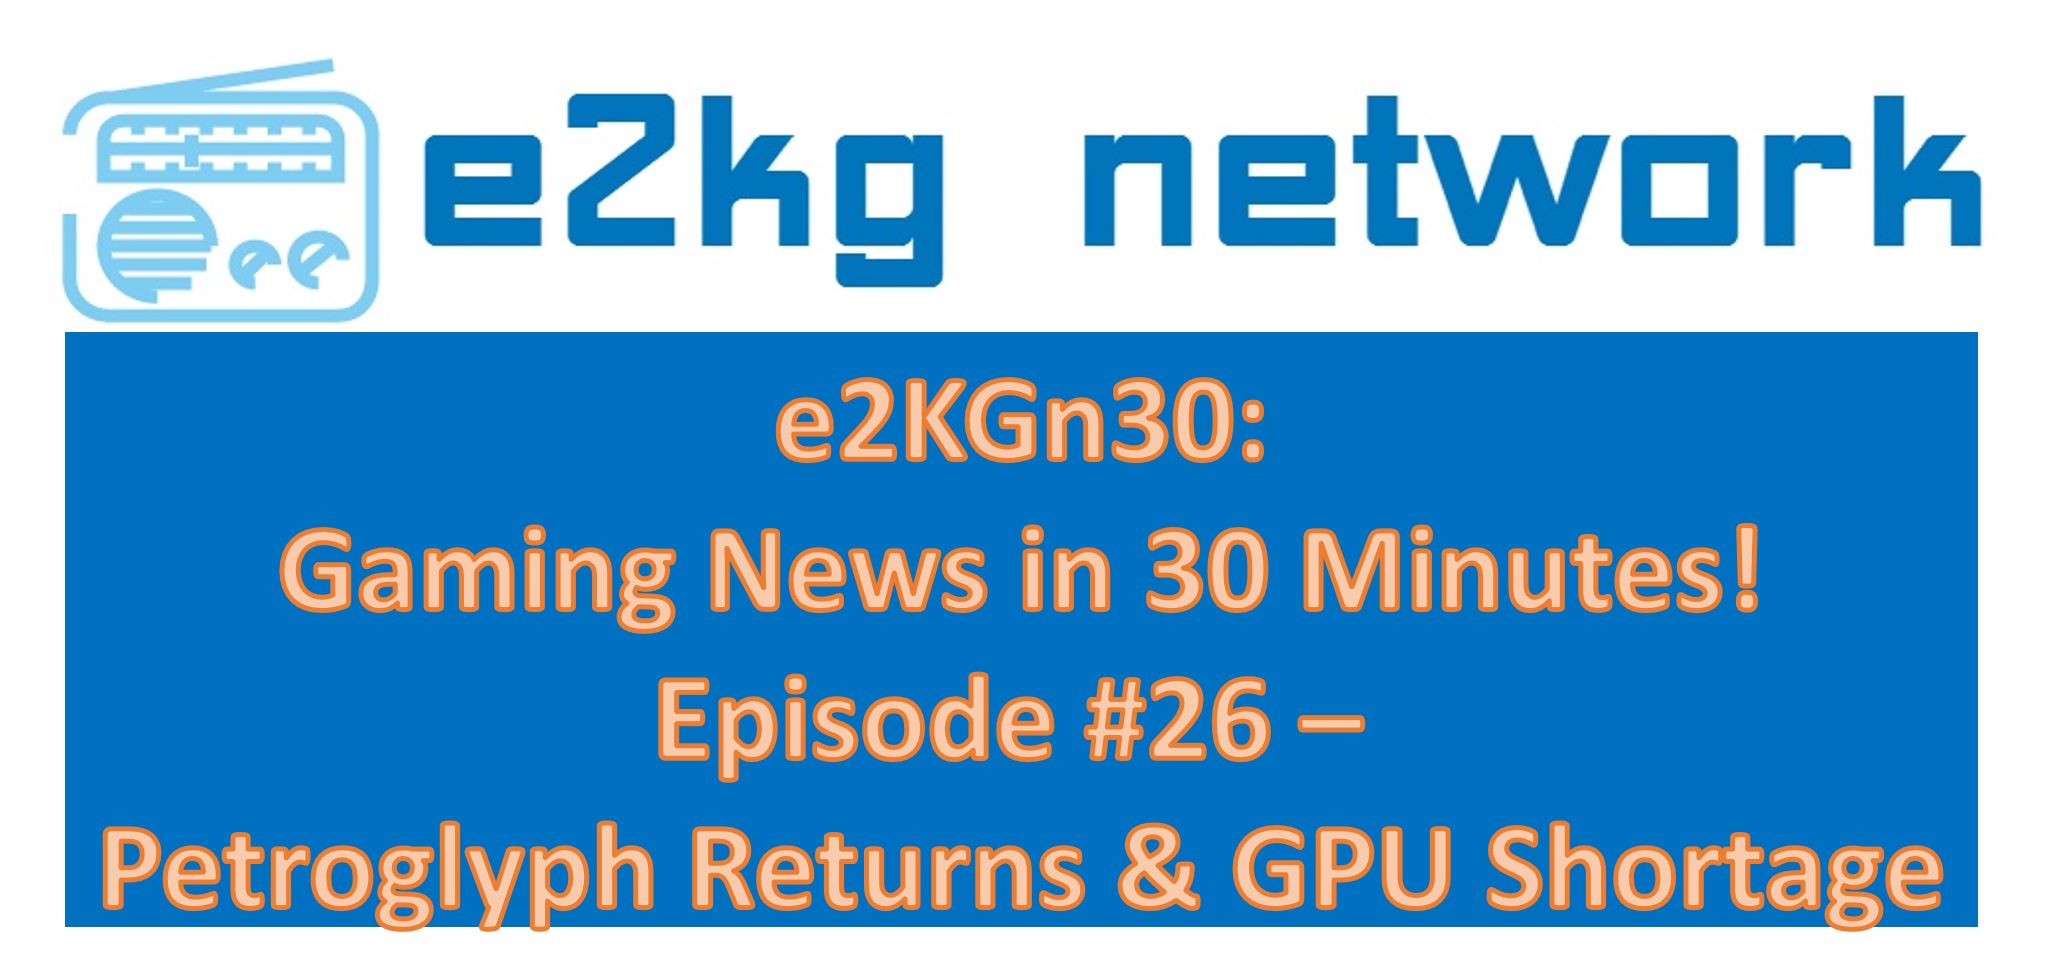 E2KGn30: Episode #26 – Petroglyph Returns & GPU Shortages